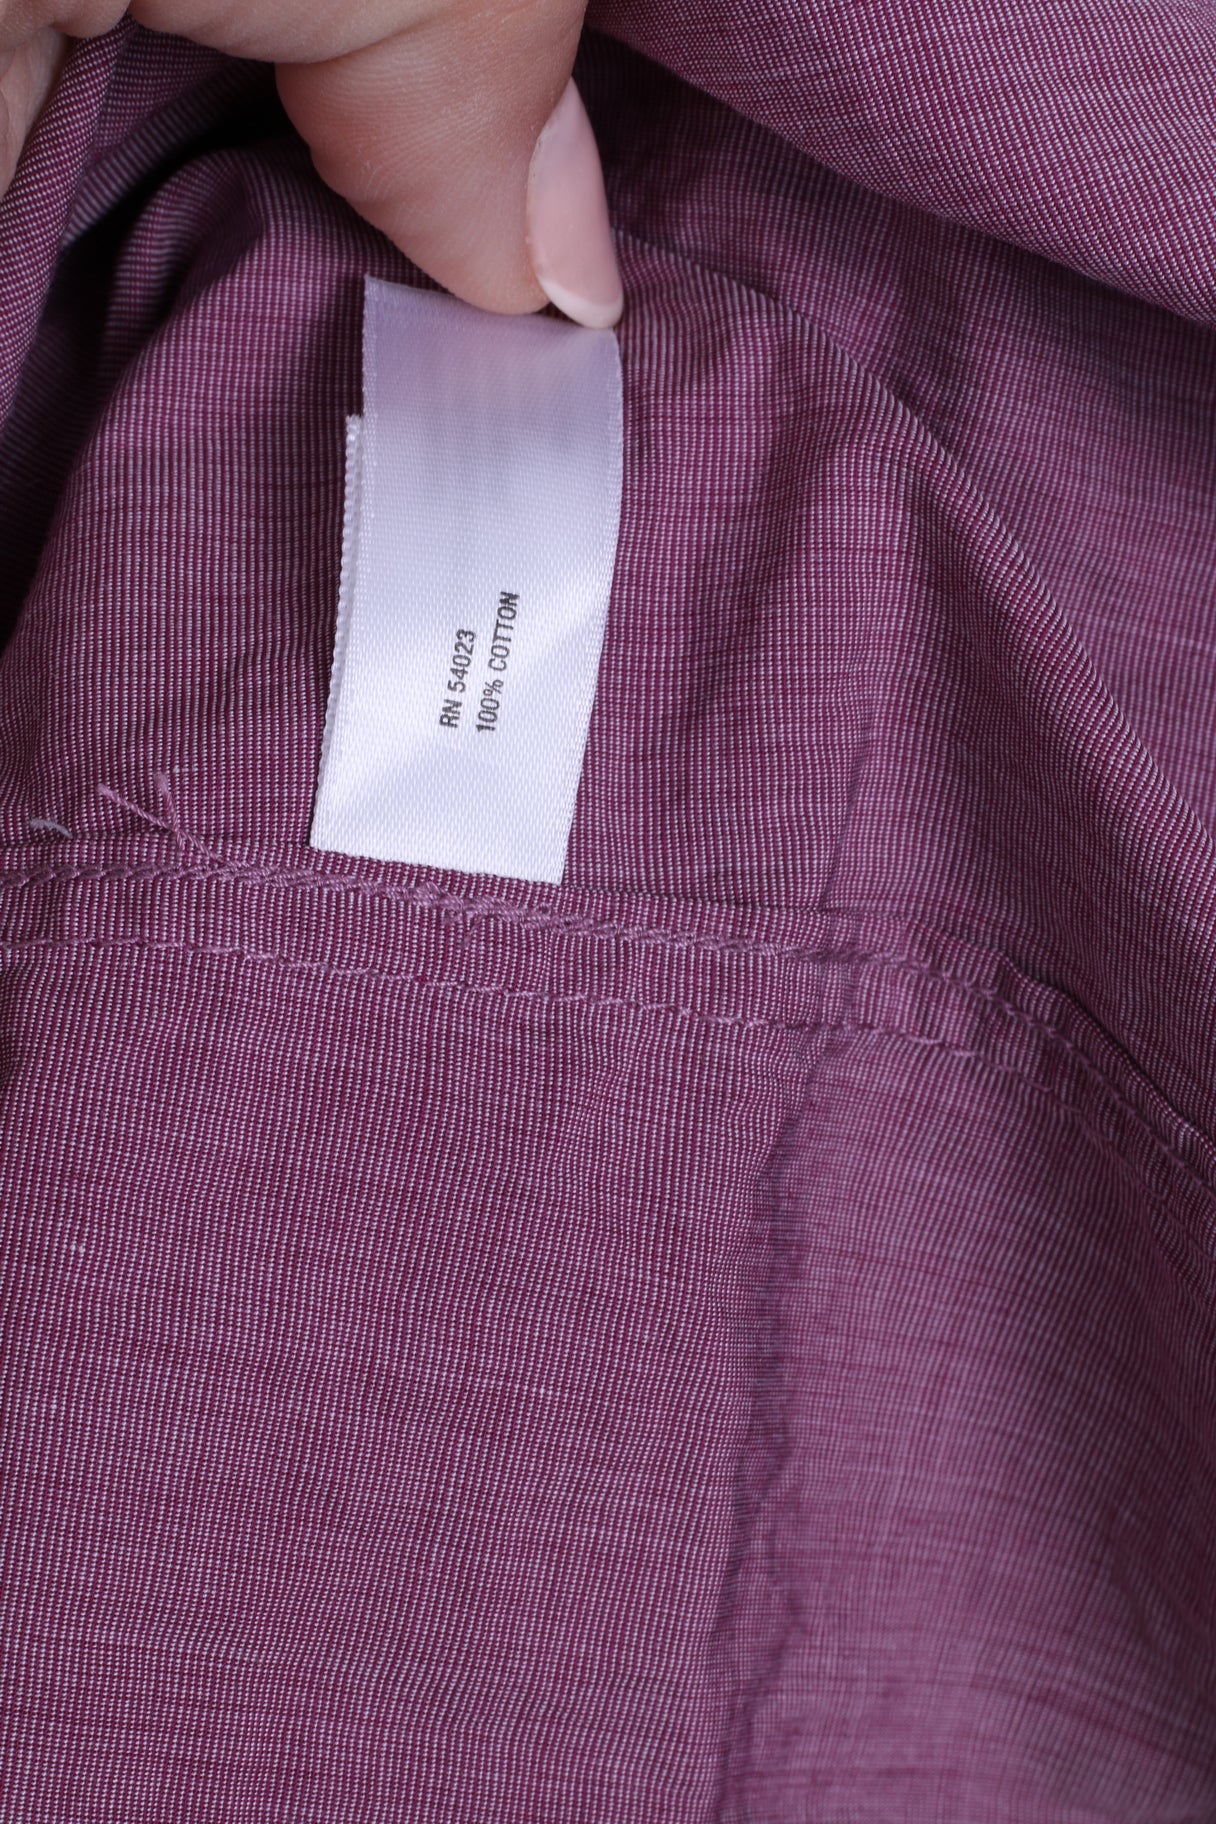 Gap Mens XL Casual Shirt Cotton Violet Slim Fit Long Sleeve